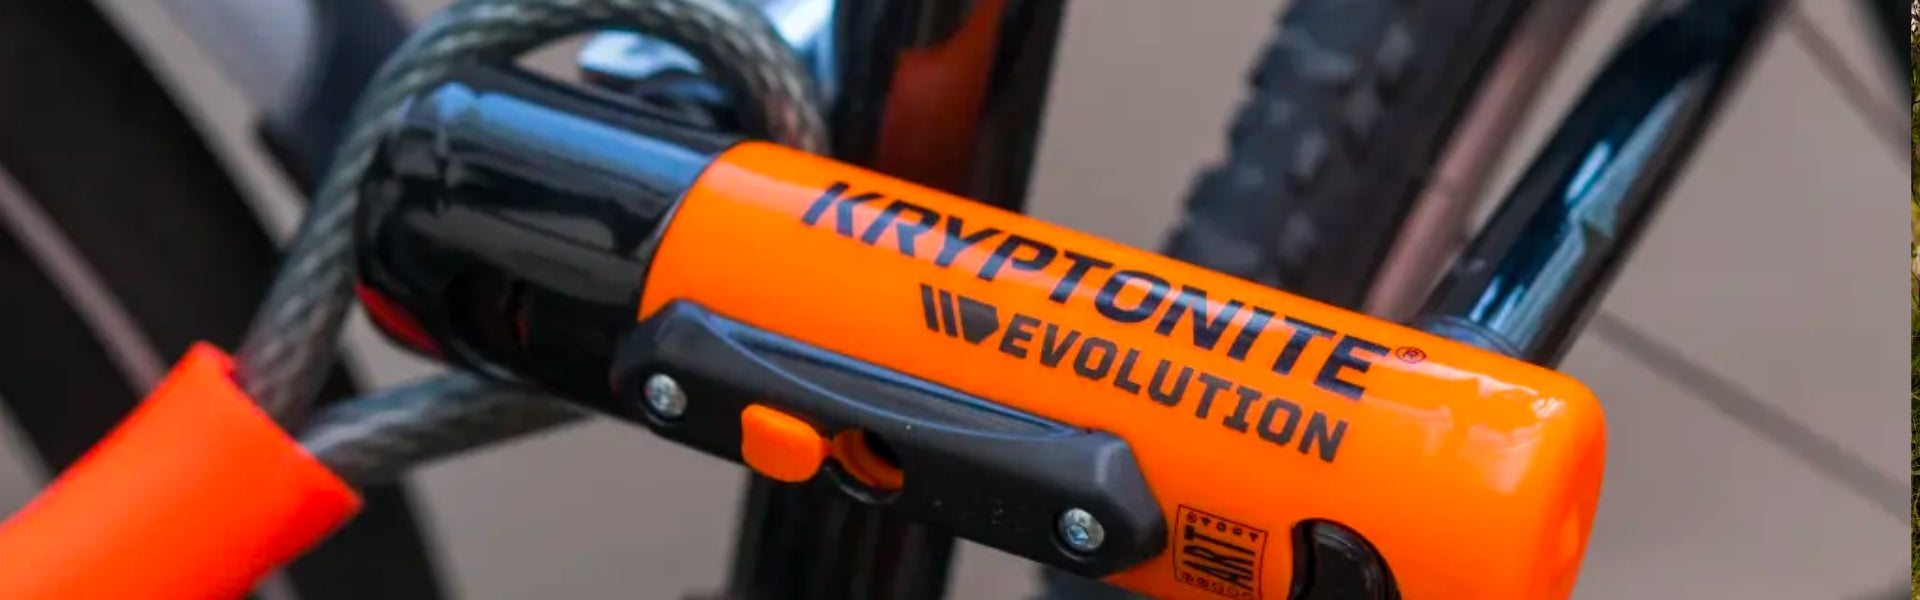 Kryptonite Bike Locks